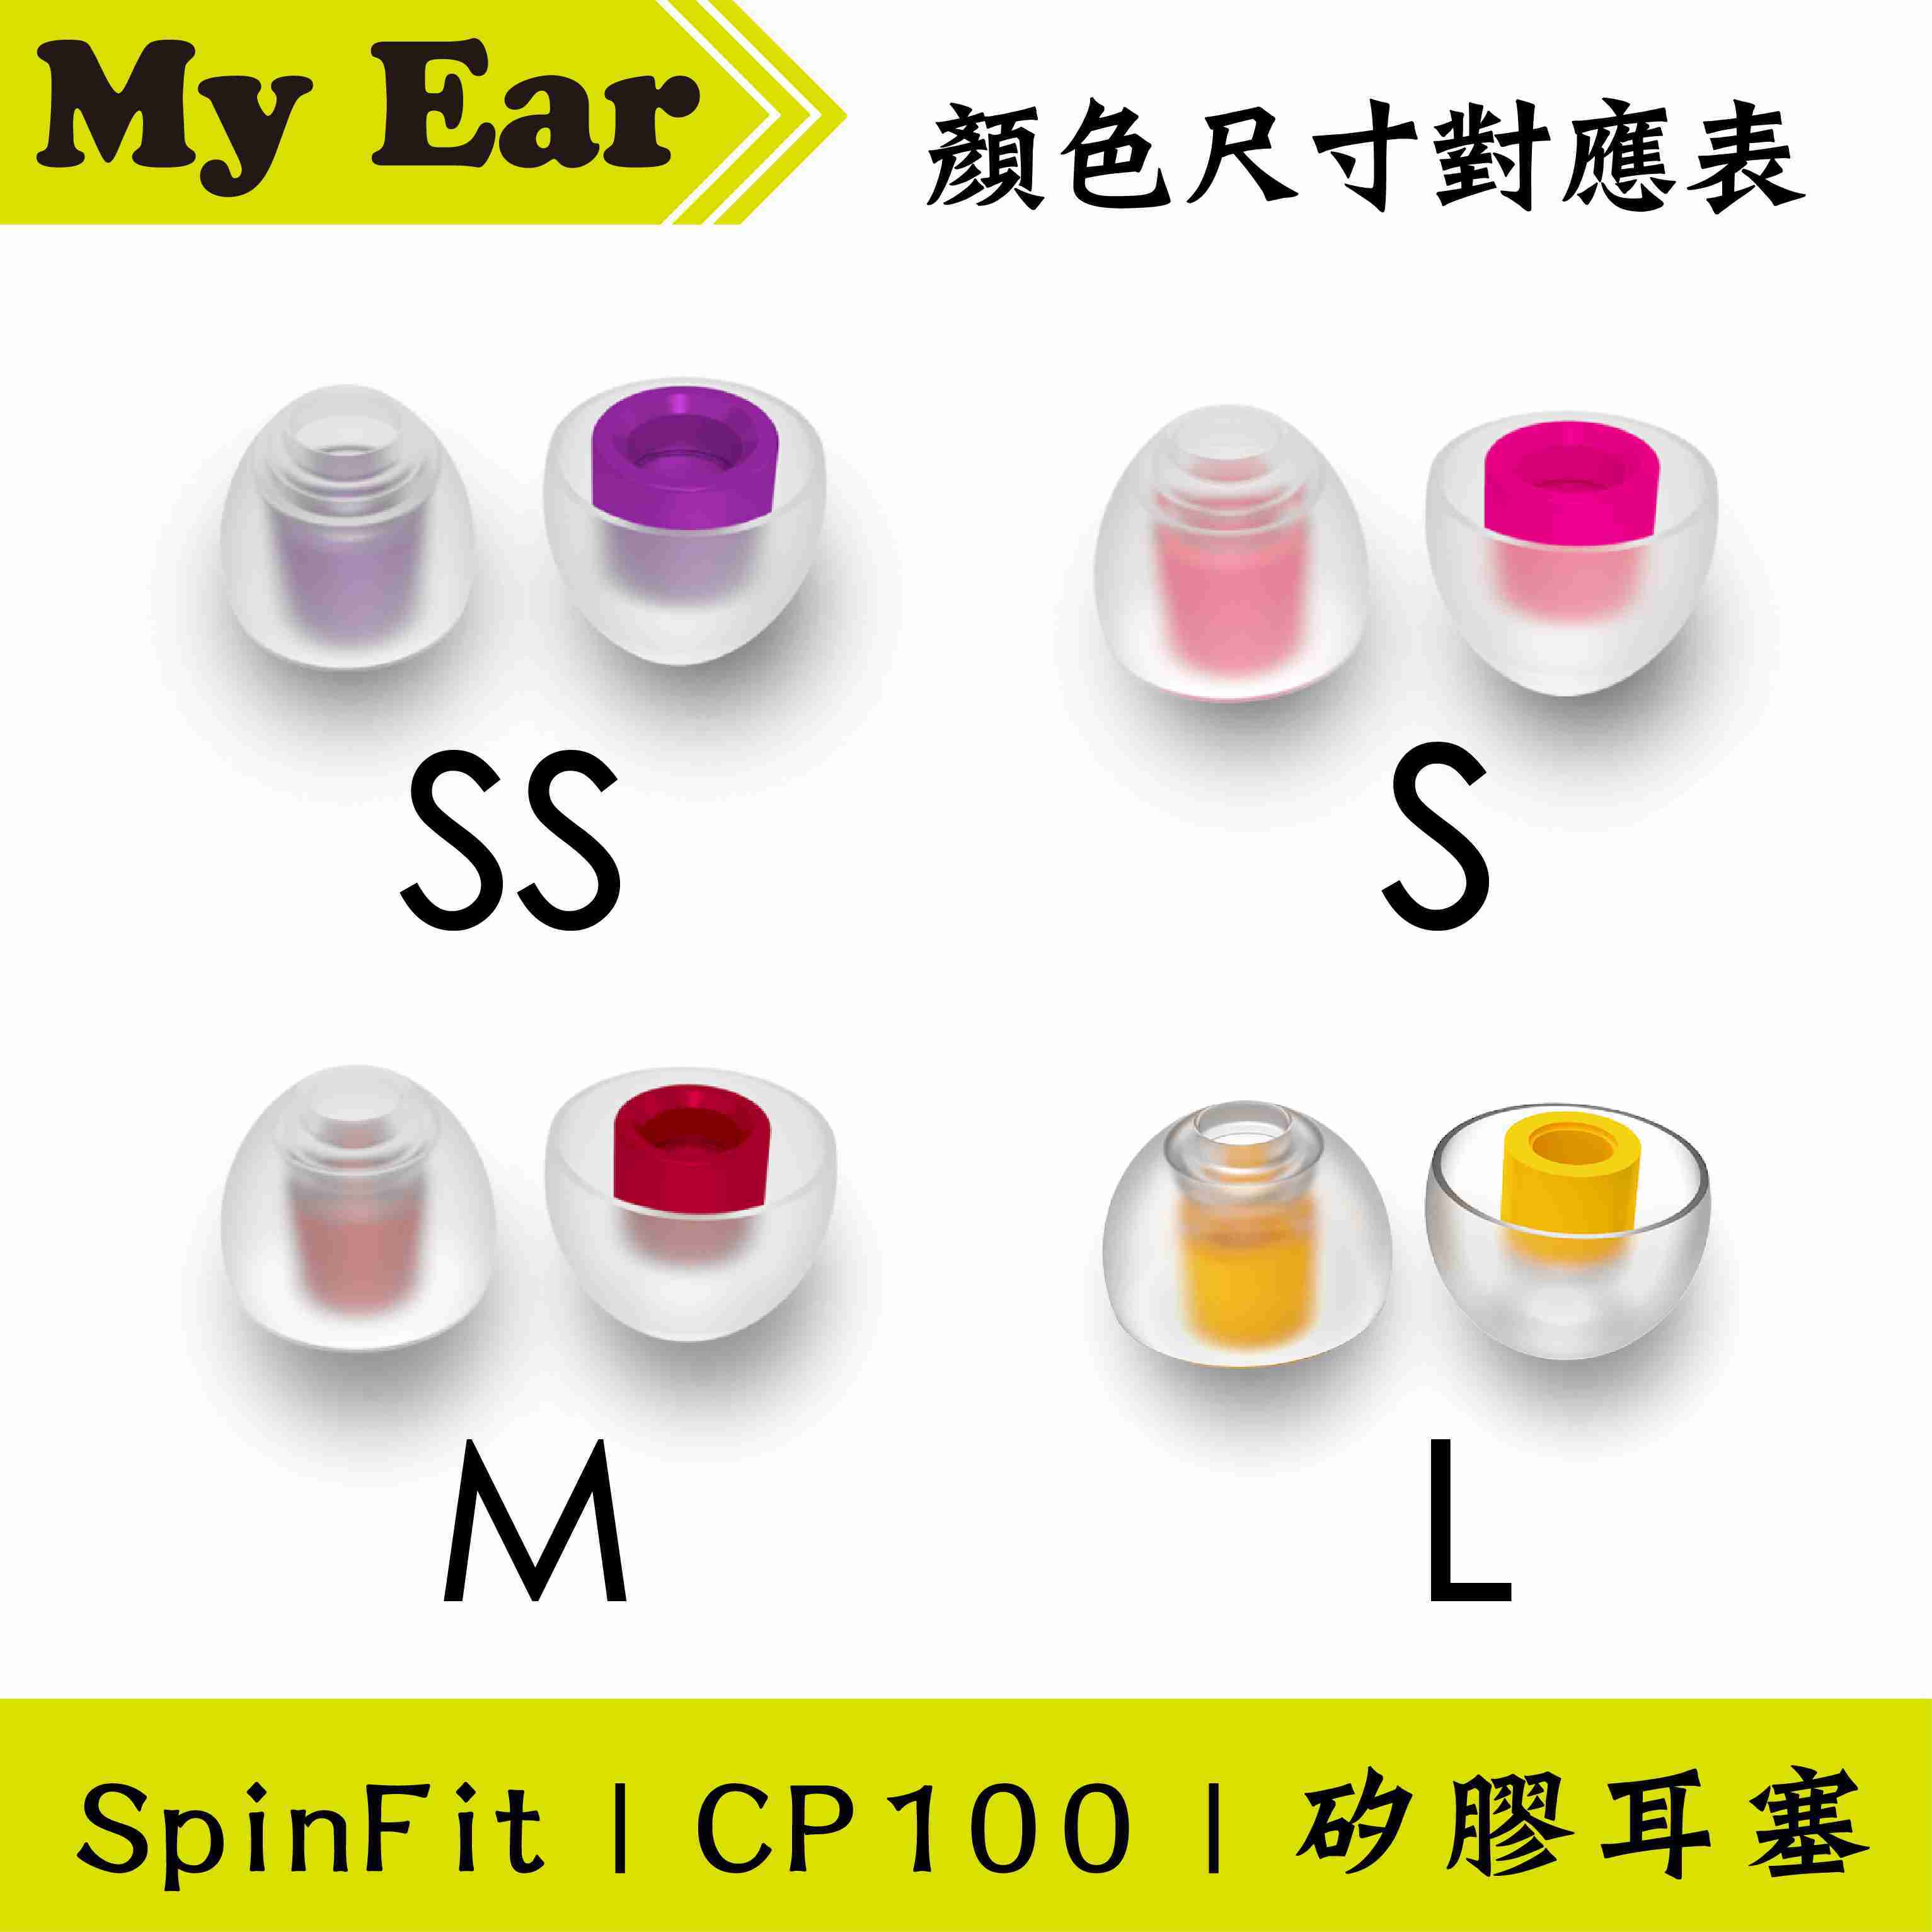 Spinfit CP100 矽膠 耳塞 M號 一對 管徑4mm ｜My Ear耳機專門店